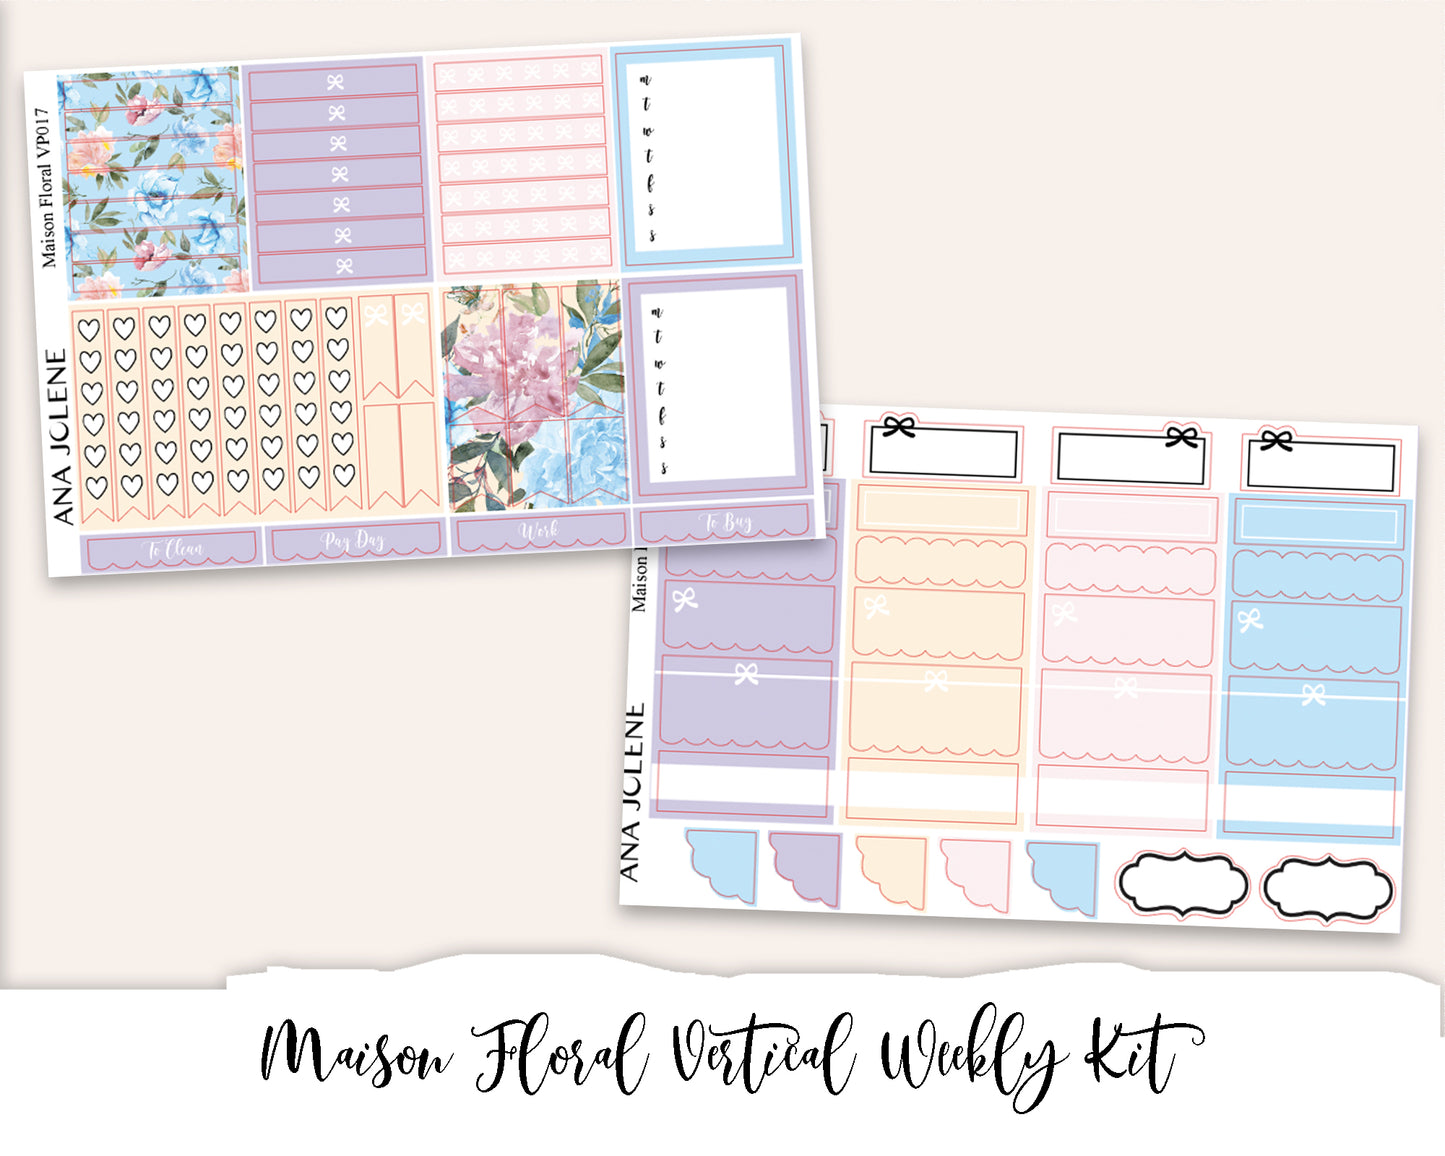 MAISON FLORAL Planner Sticker Kit (Vertical Weekly)